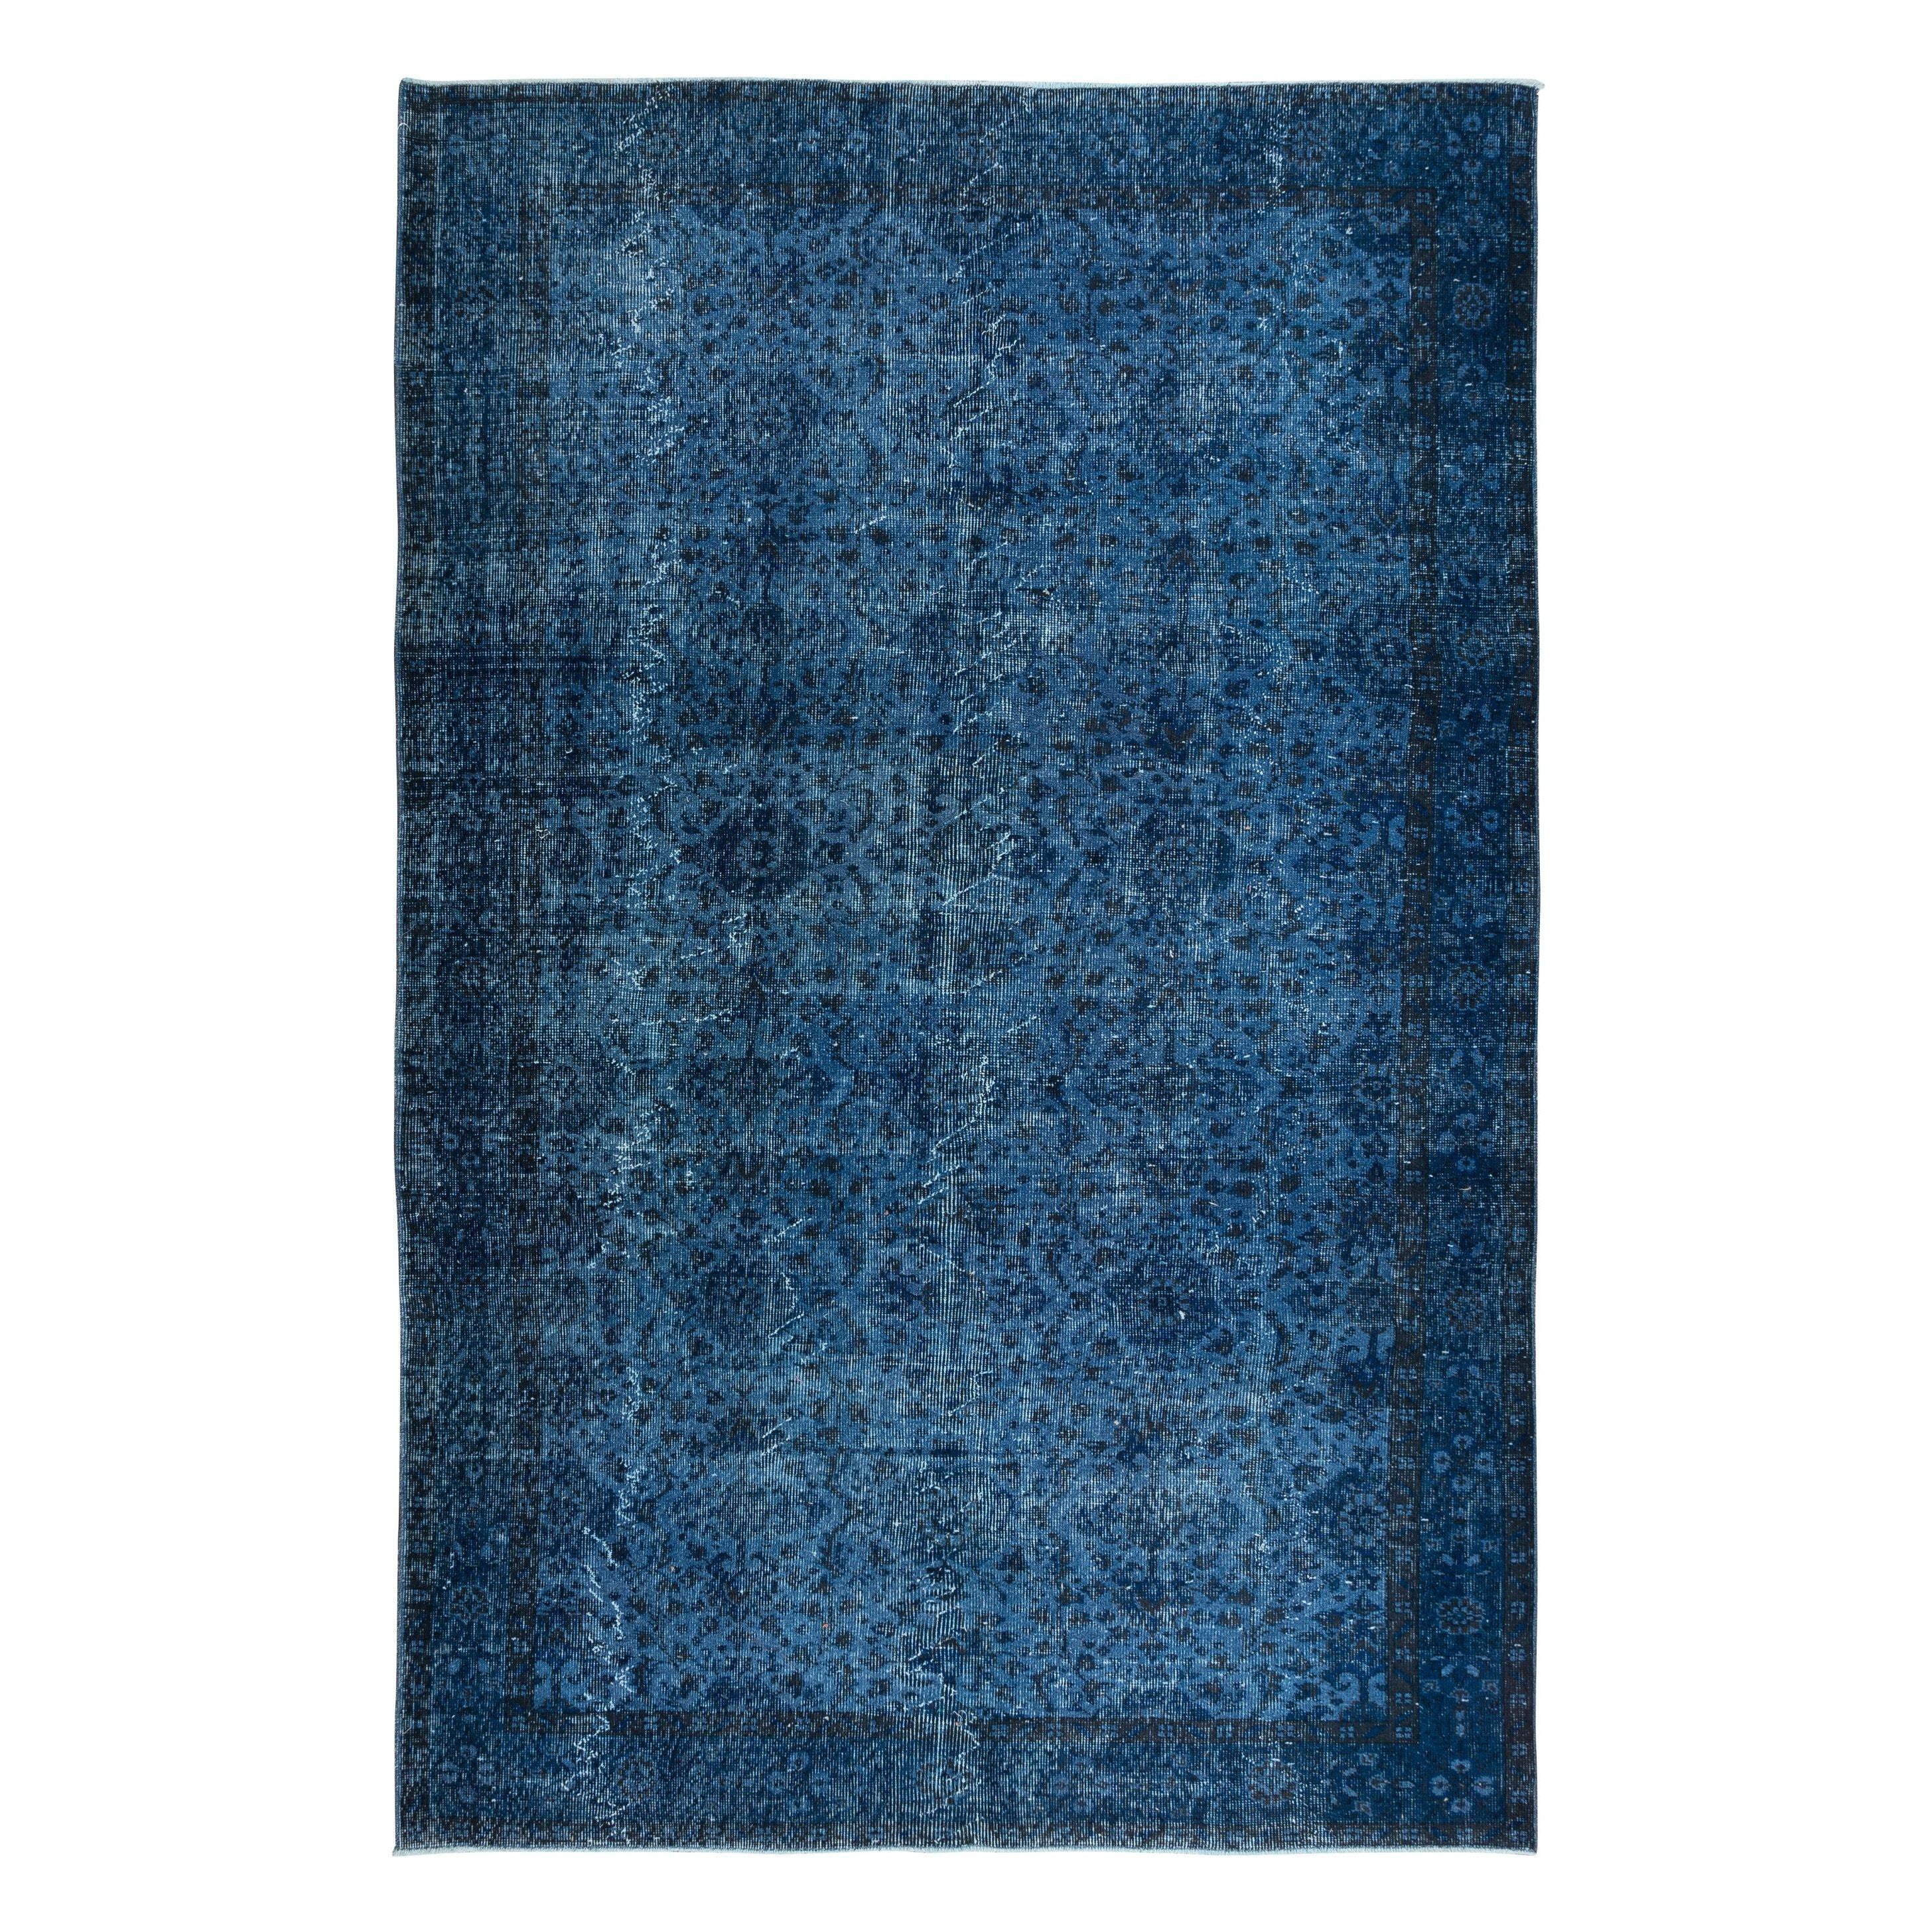 6.3x9.8 Ft Ocean Blue Handmade Area Rug, Decorative Floral Turkish Wool Carpet